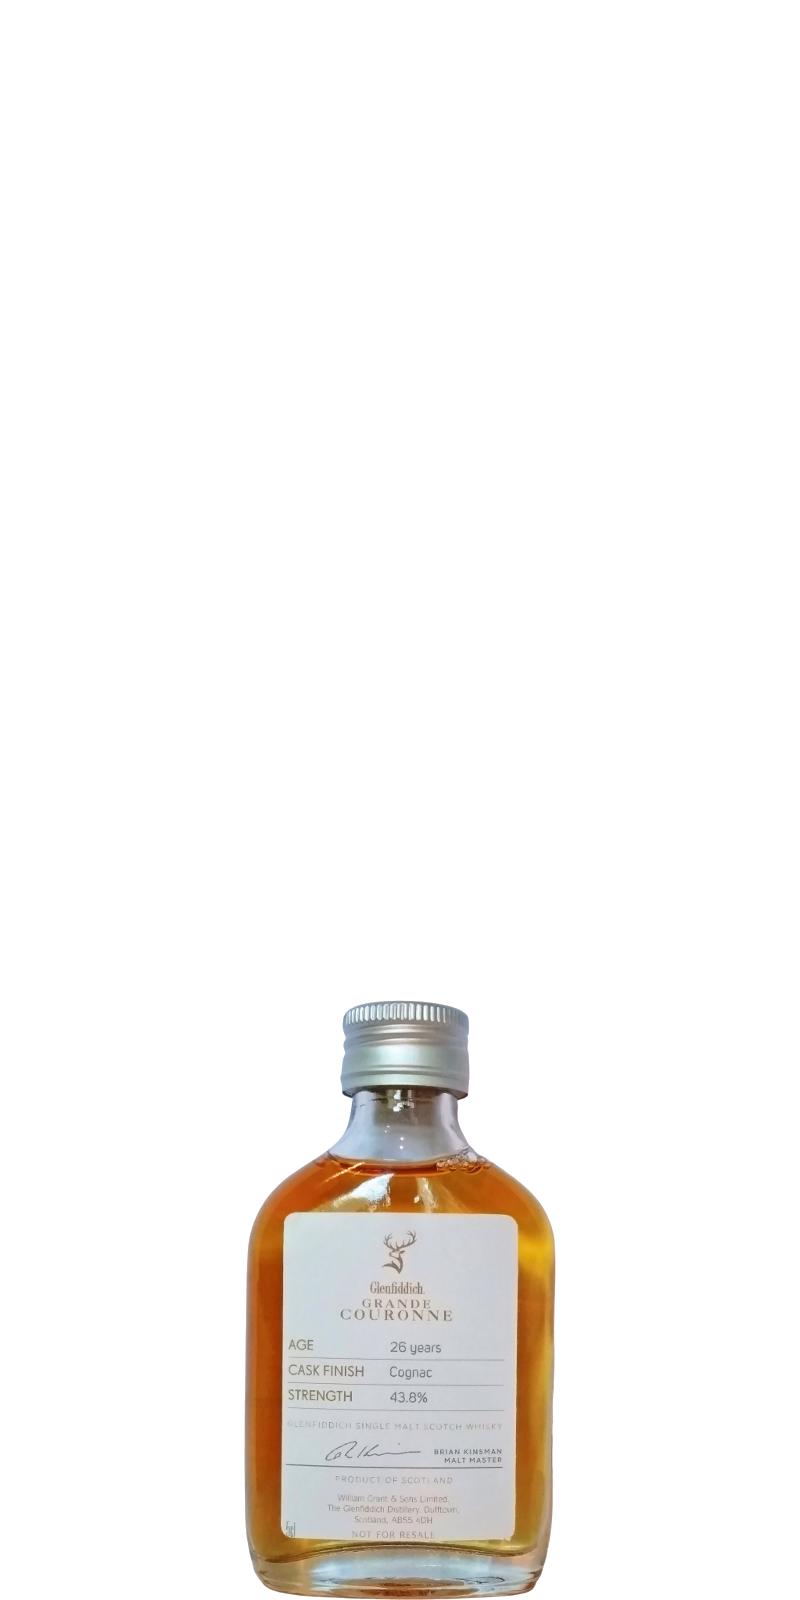 Glenfiddich Grande Couronne 26 Year Old Single Malt Scotch Whisky